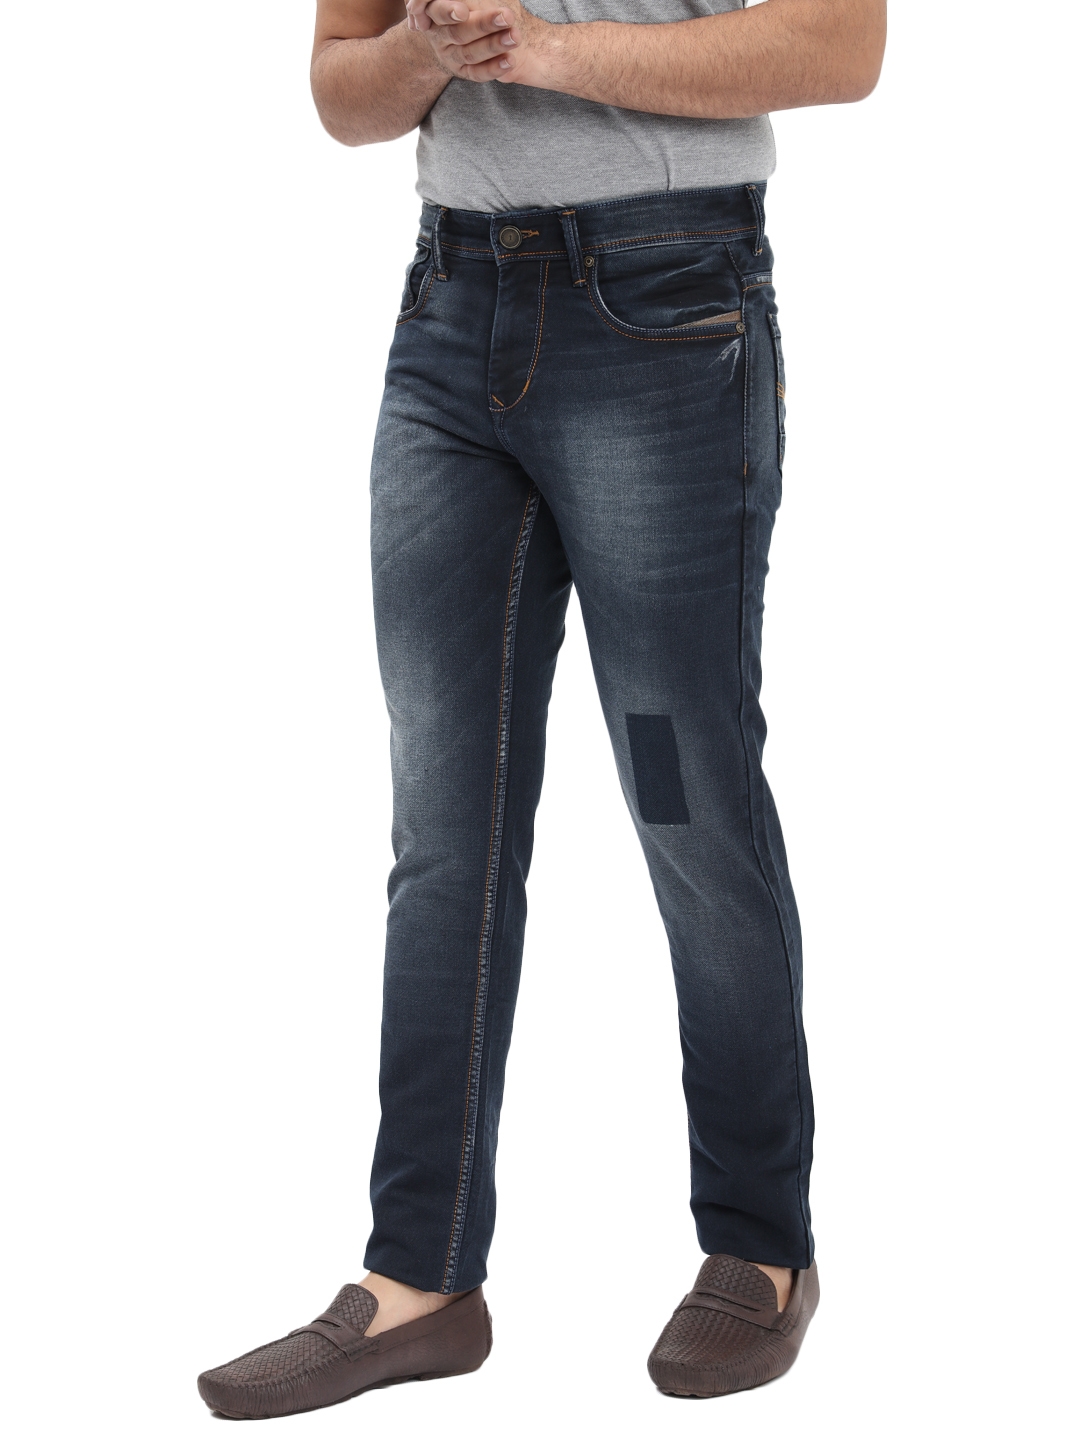 D'cot by Donear | D'cot by Donear Men's Blue Cotton Jeans 1